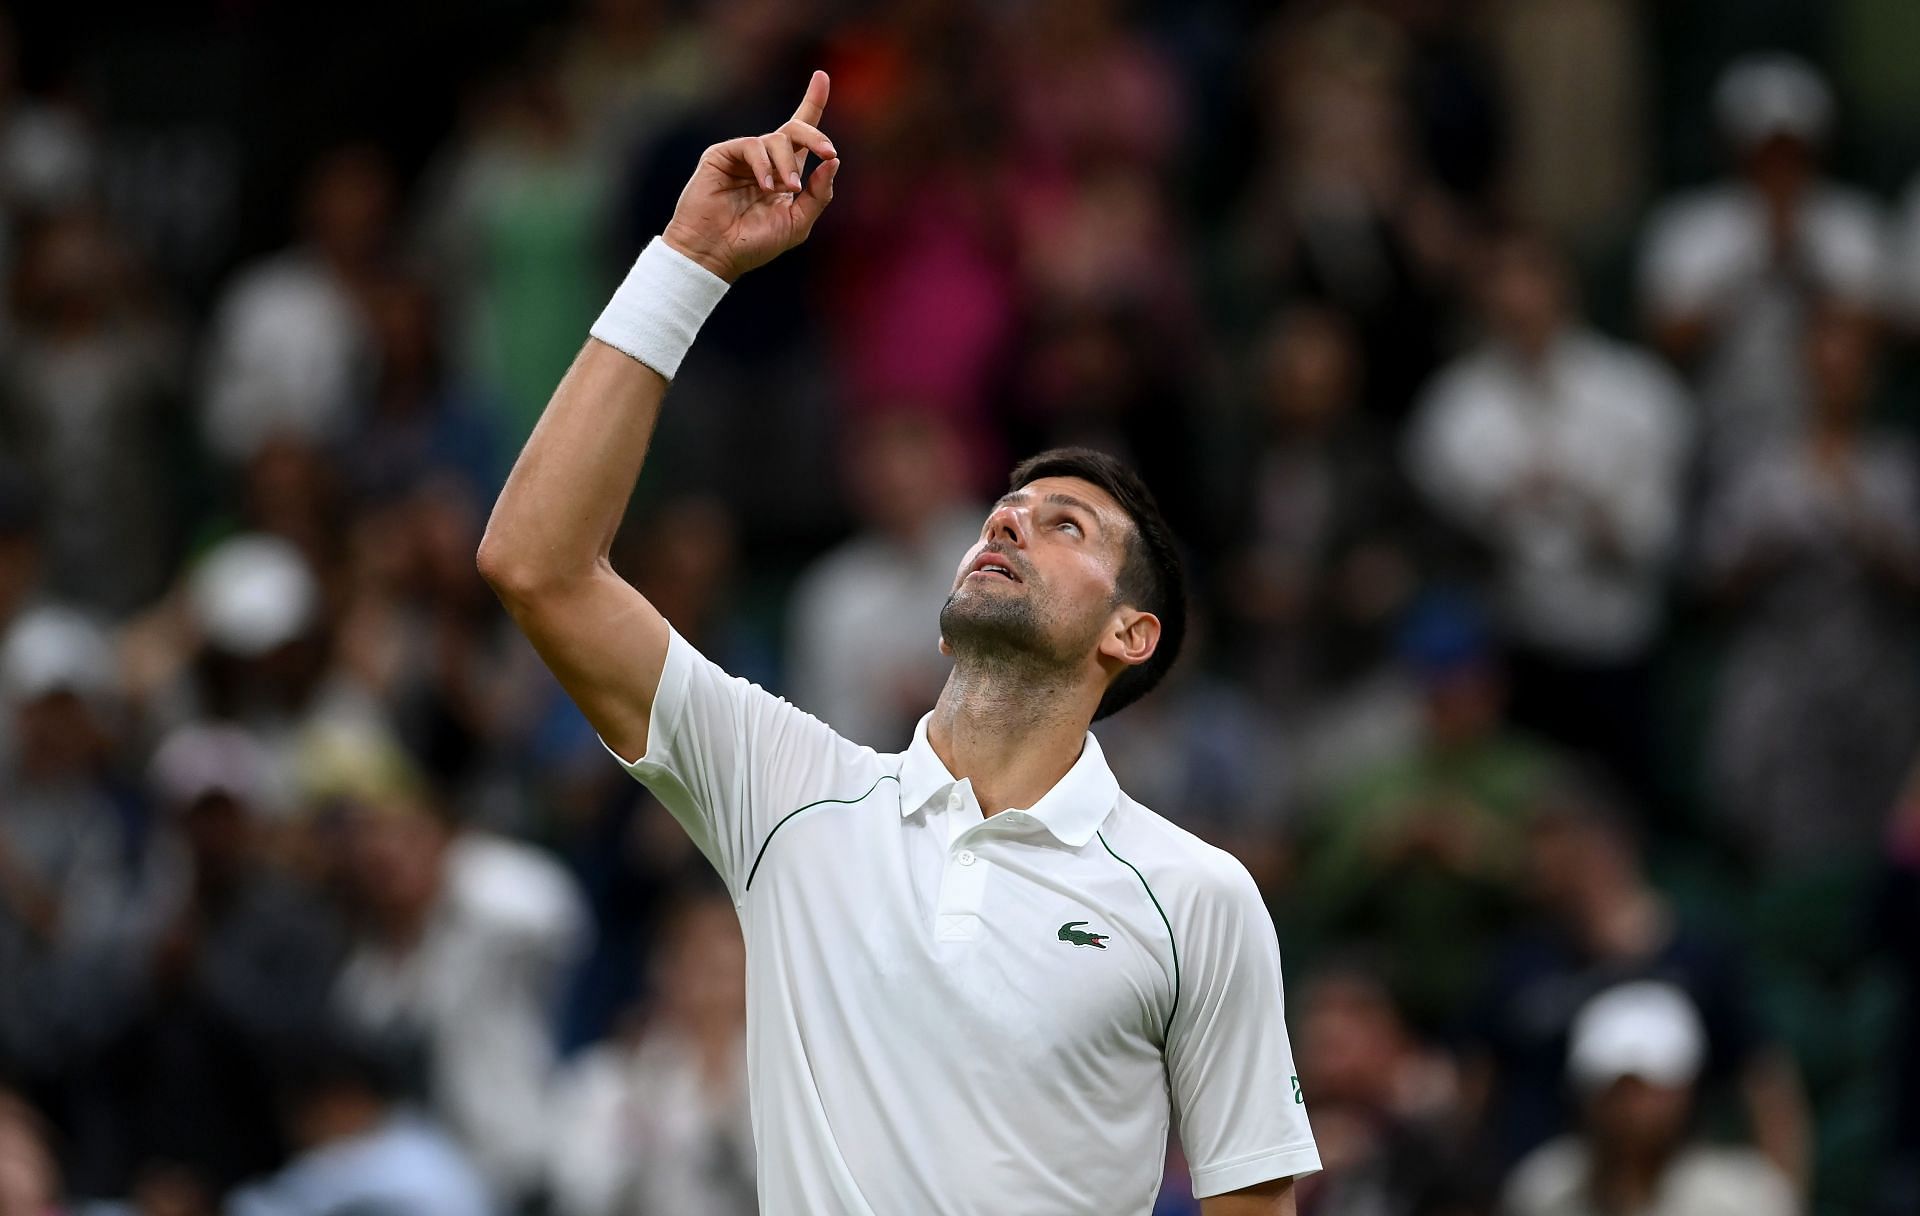 Novak Djokovic ends the dream run of Dutch wildcard Tim van Rijthoven in their fourth-round face-off at Wimbledon